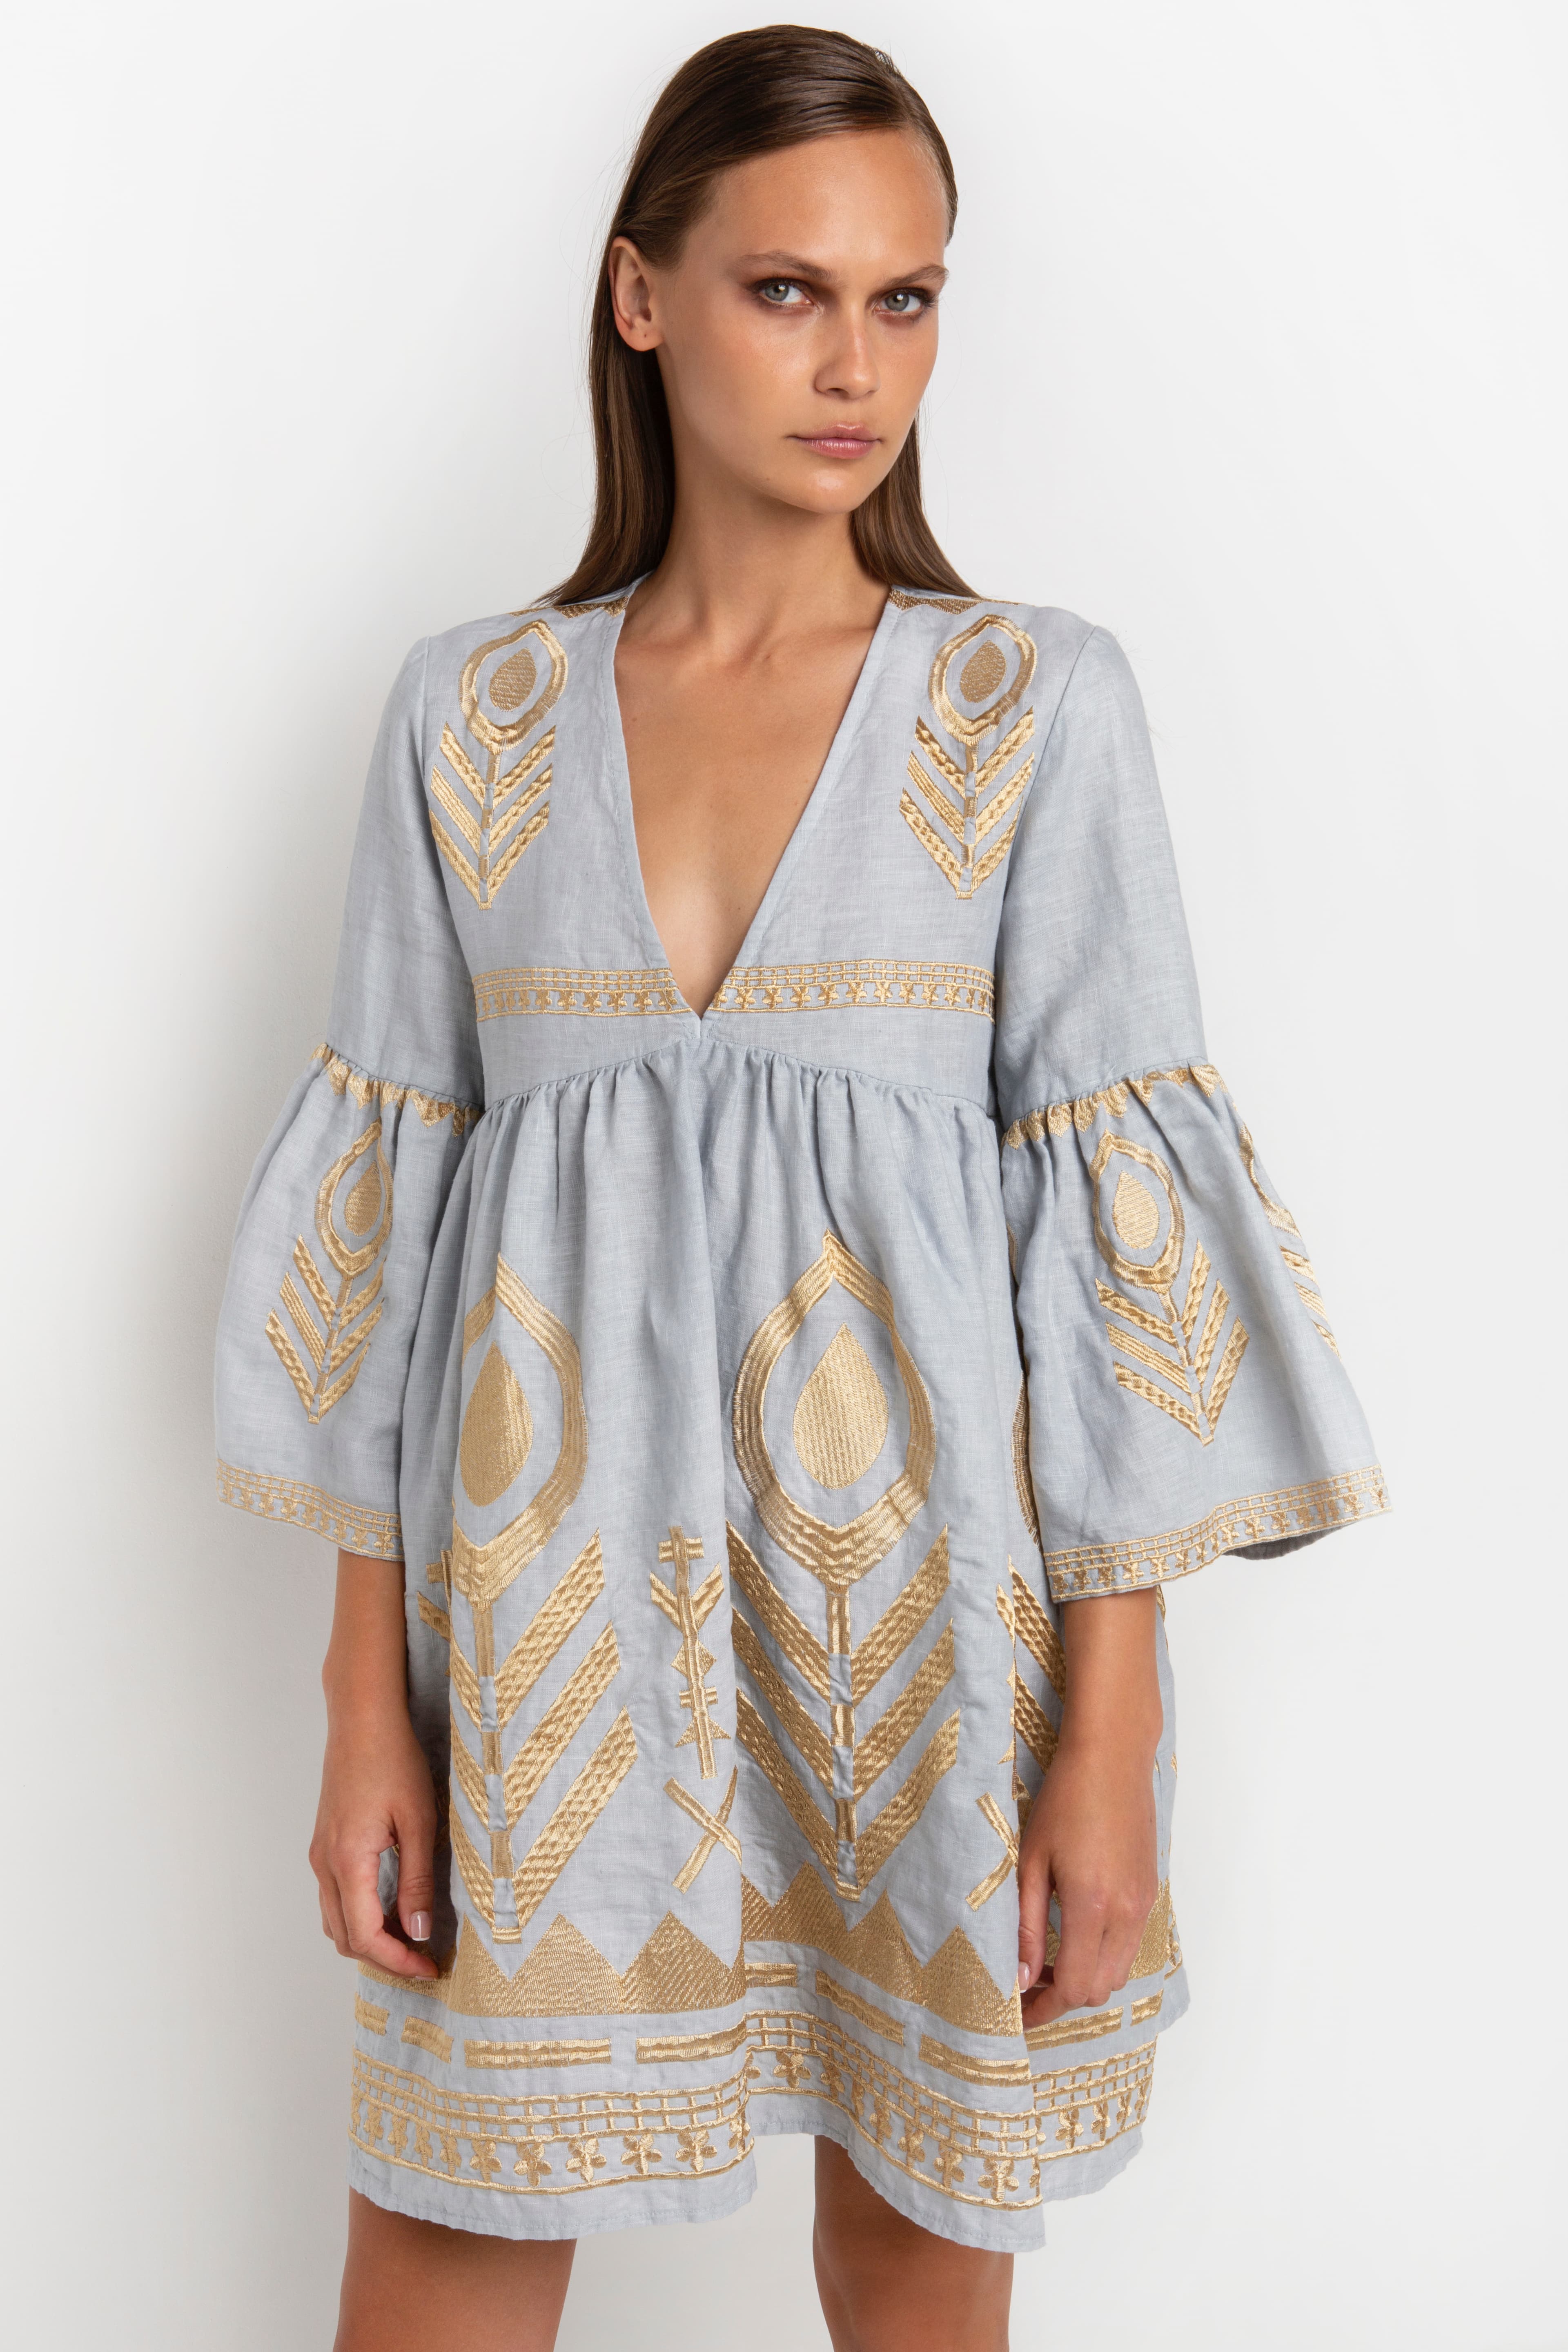 Greek Archaic Kori Short Grey Dress with gold